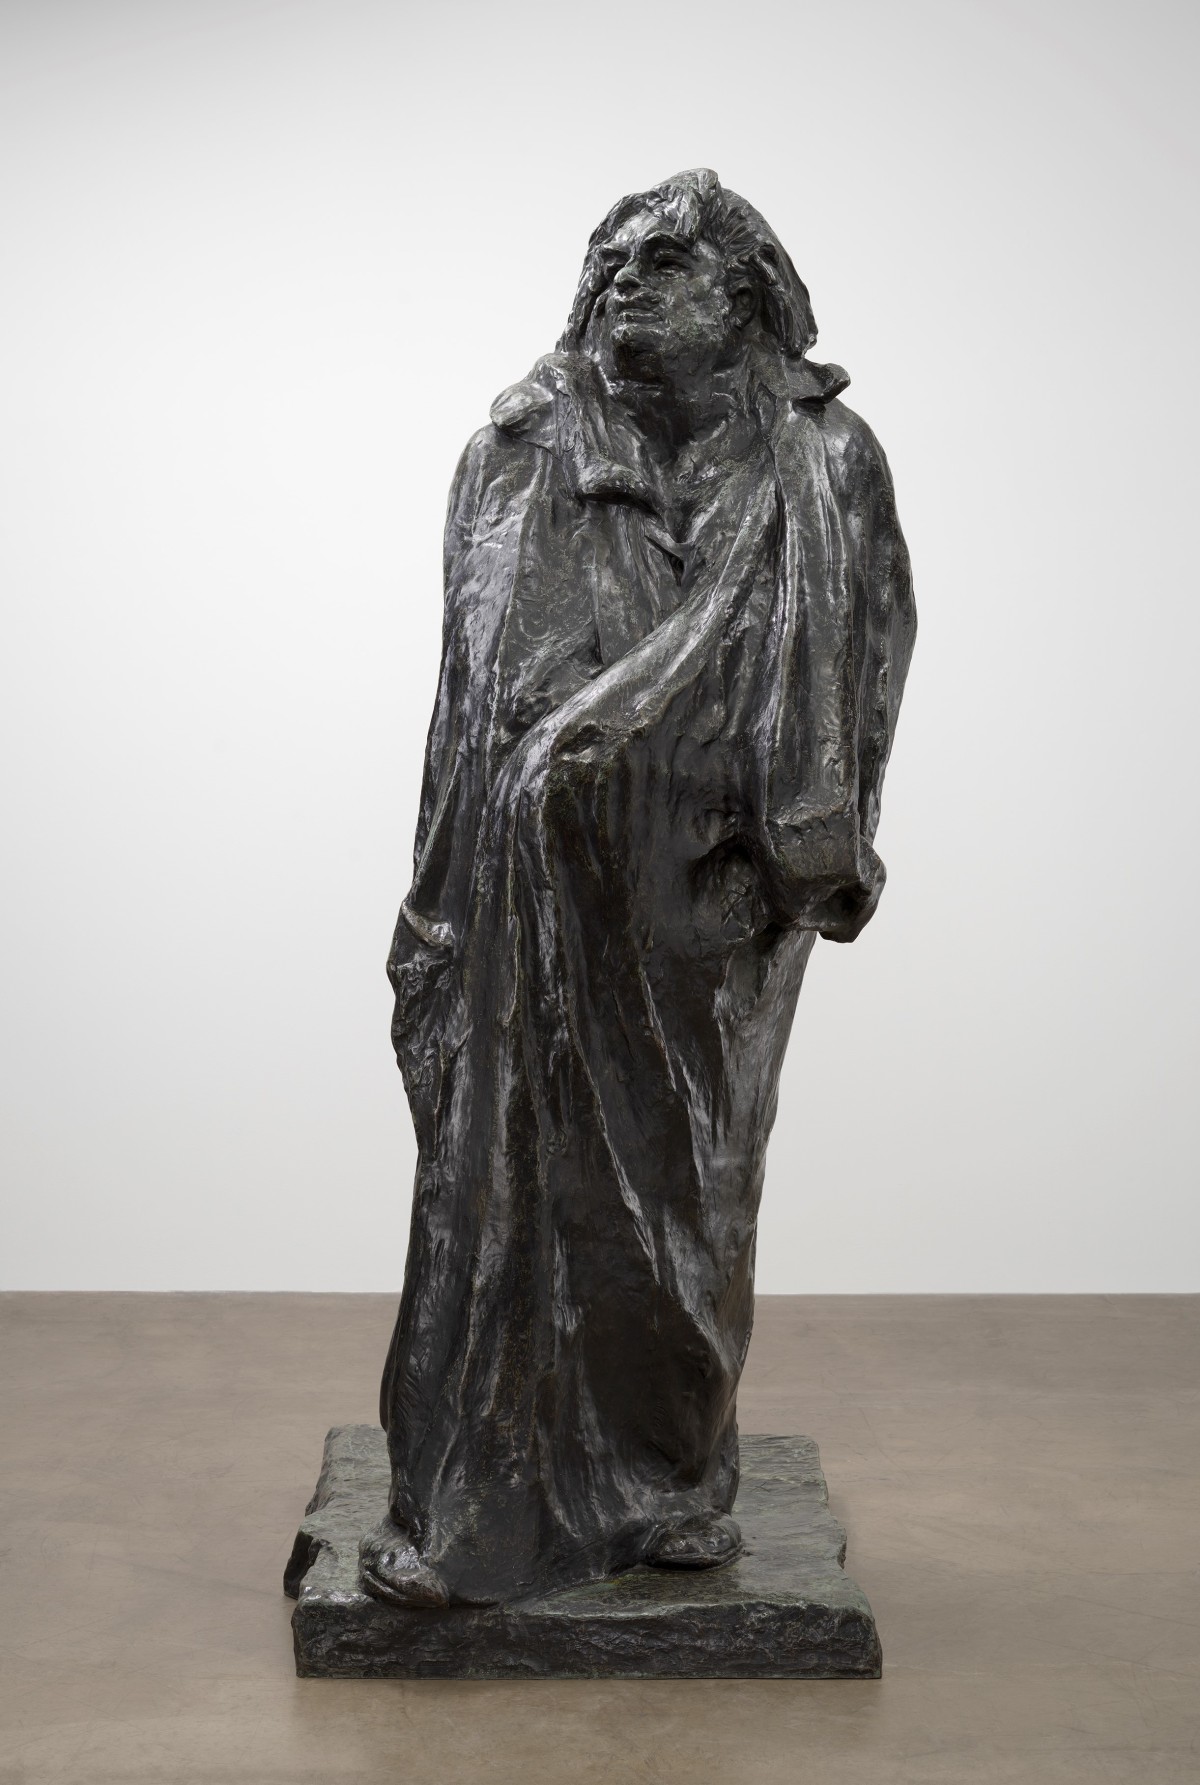 O que disse Rosalind Krauss sobre a escultura Balzac de Rodin?